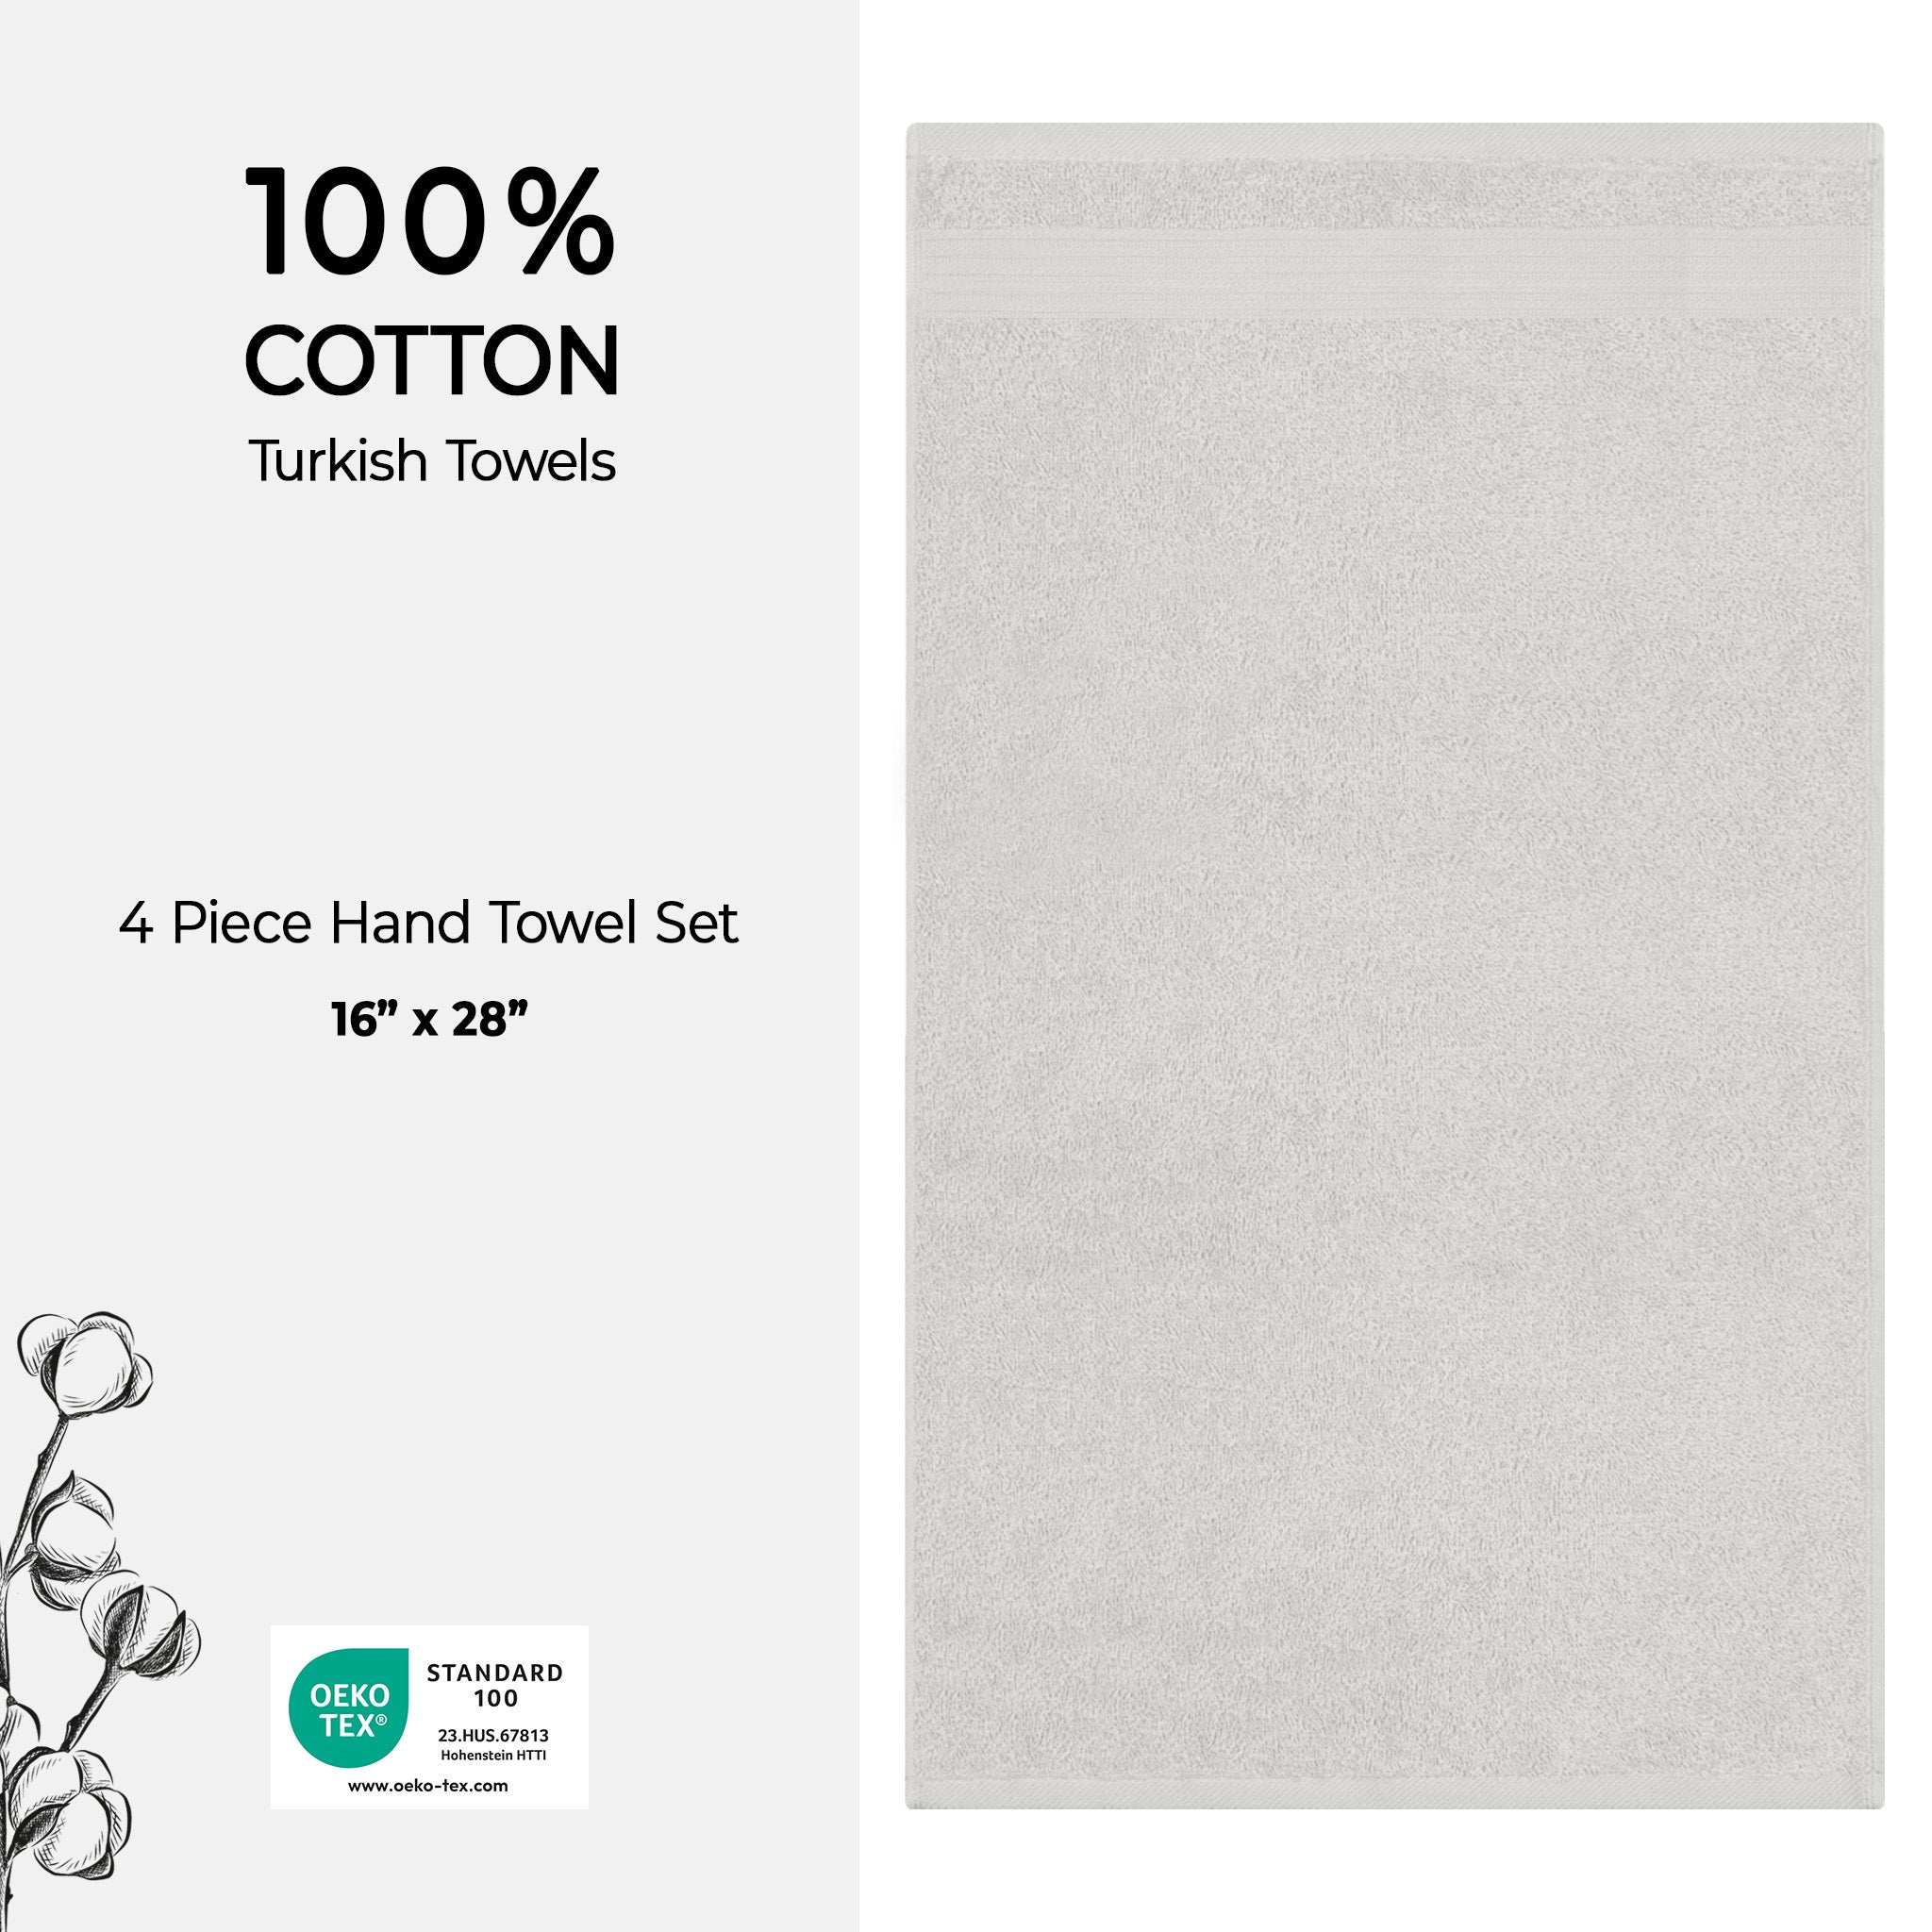 American Soft Linen Bekos 100% Cotton Turkish Towels, 4 Piece Hand Towel Set -silver-gray-04